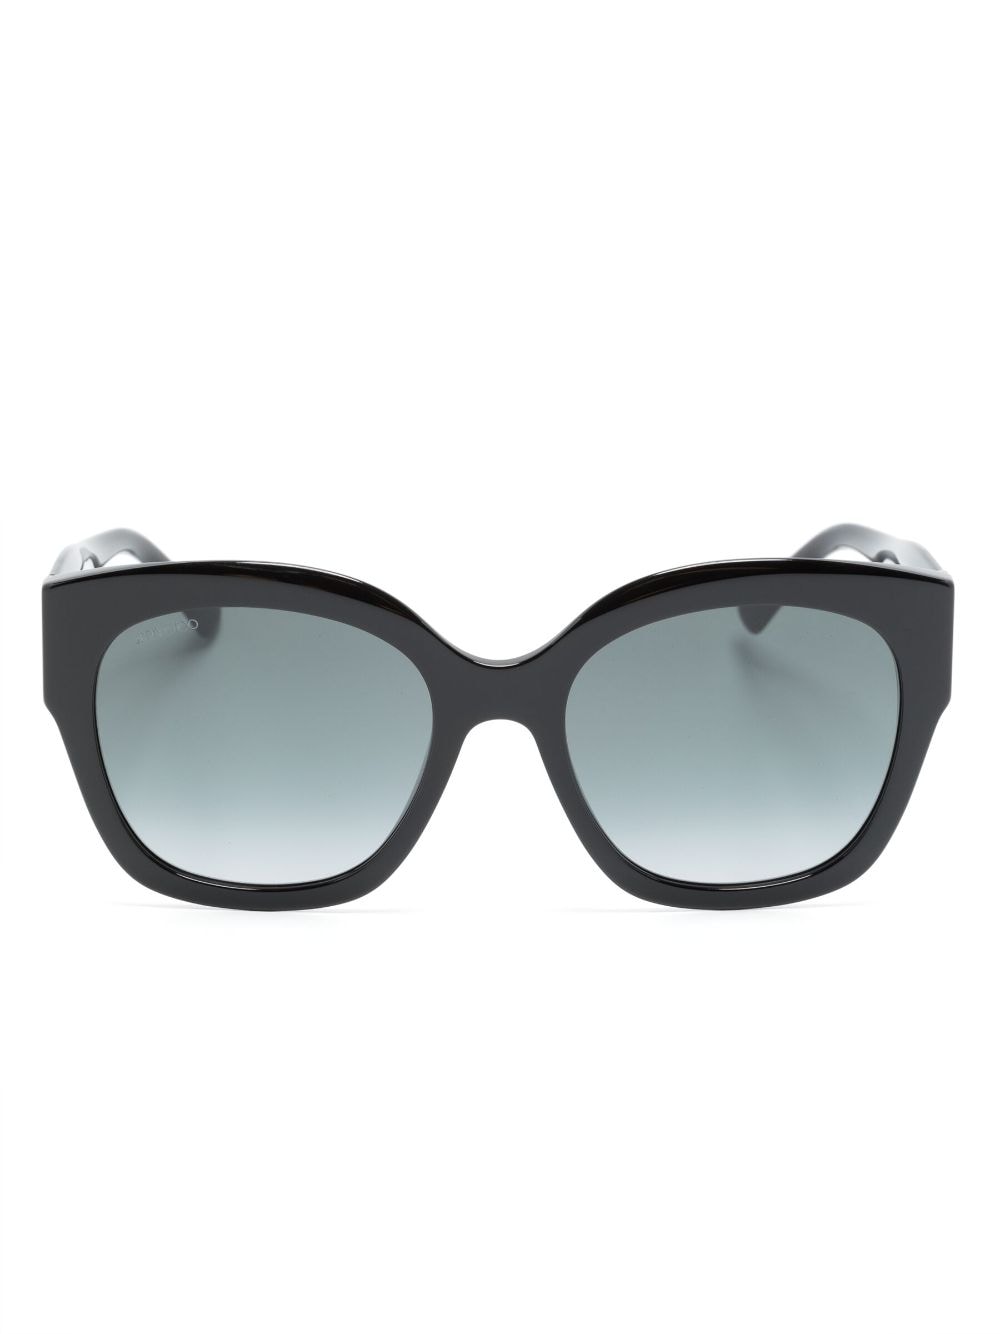 Image 1 of Jimmy Choo Eyewear Leela square-frame sunglasses